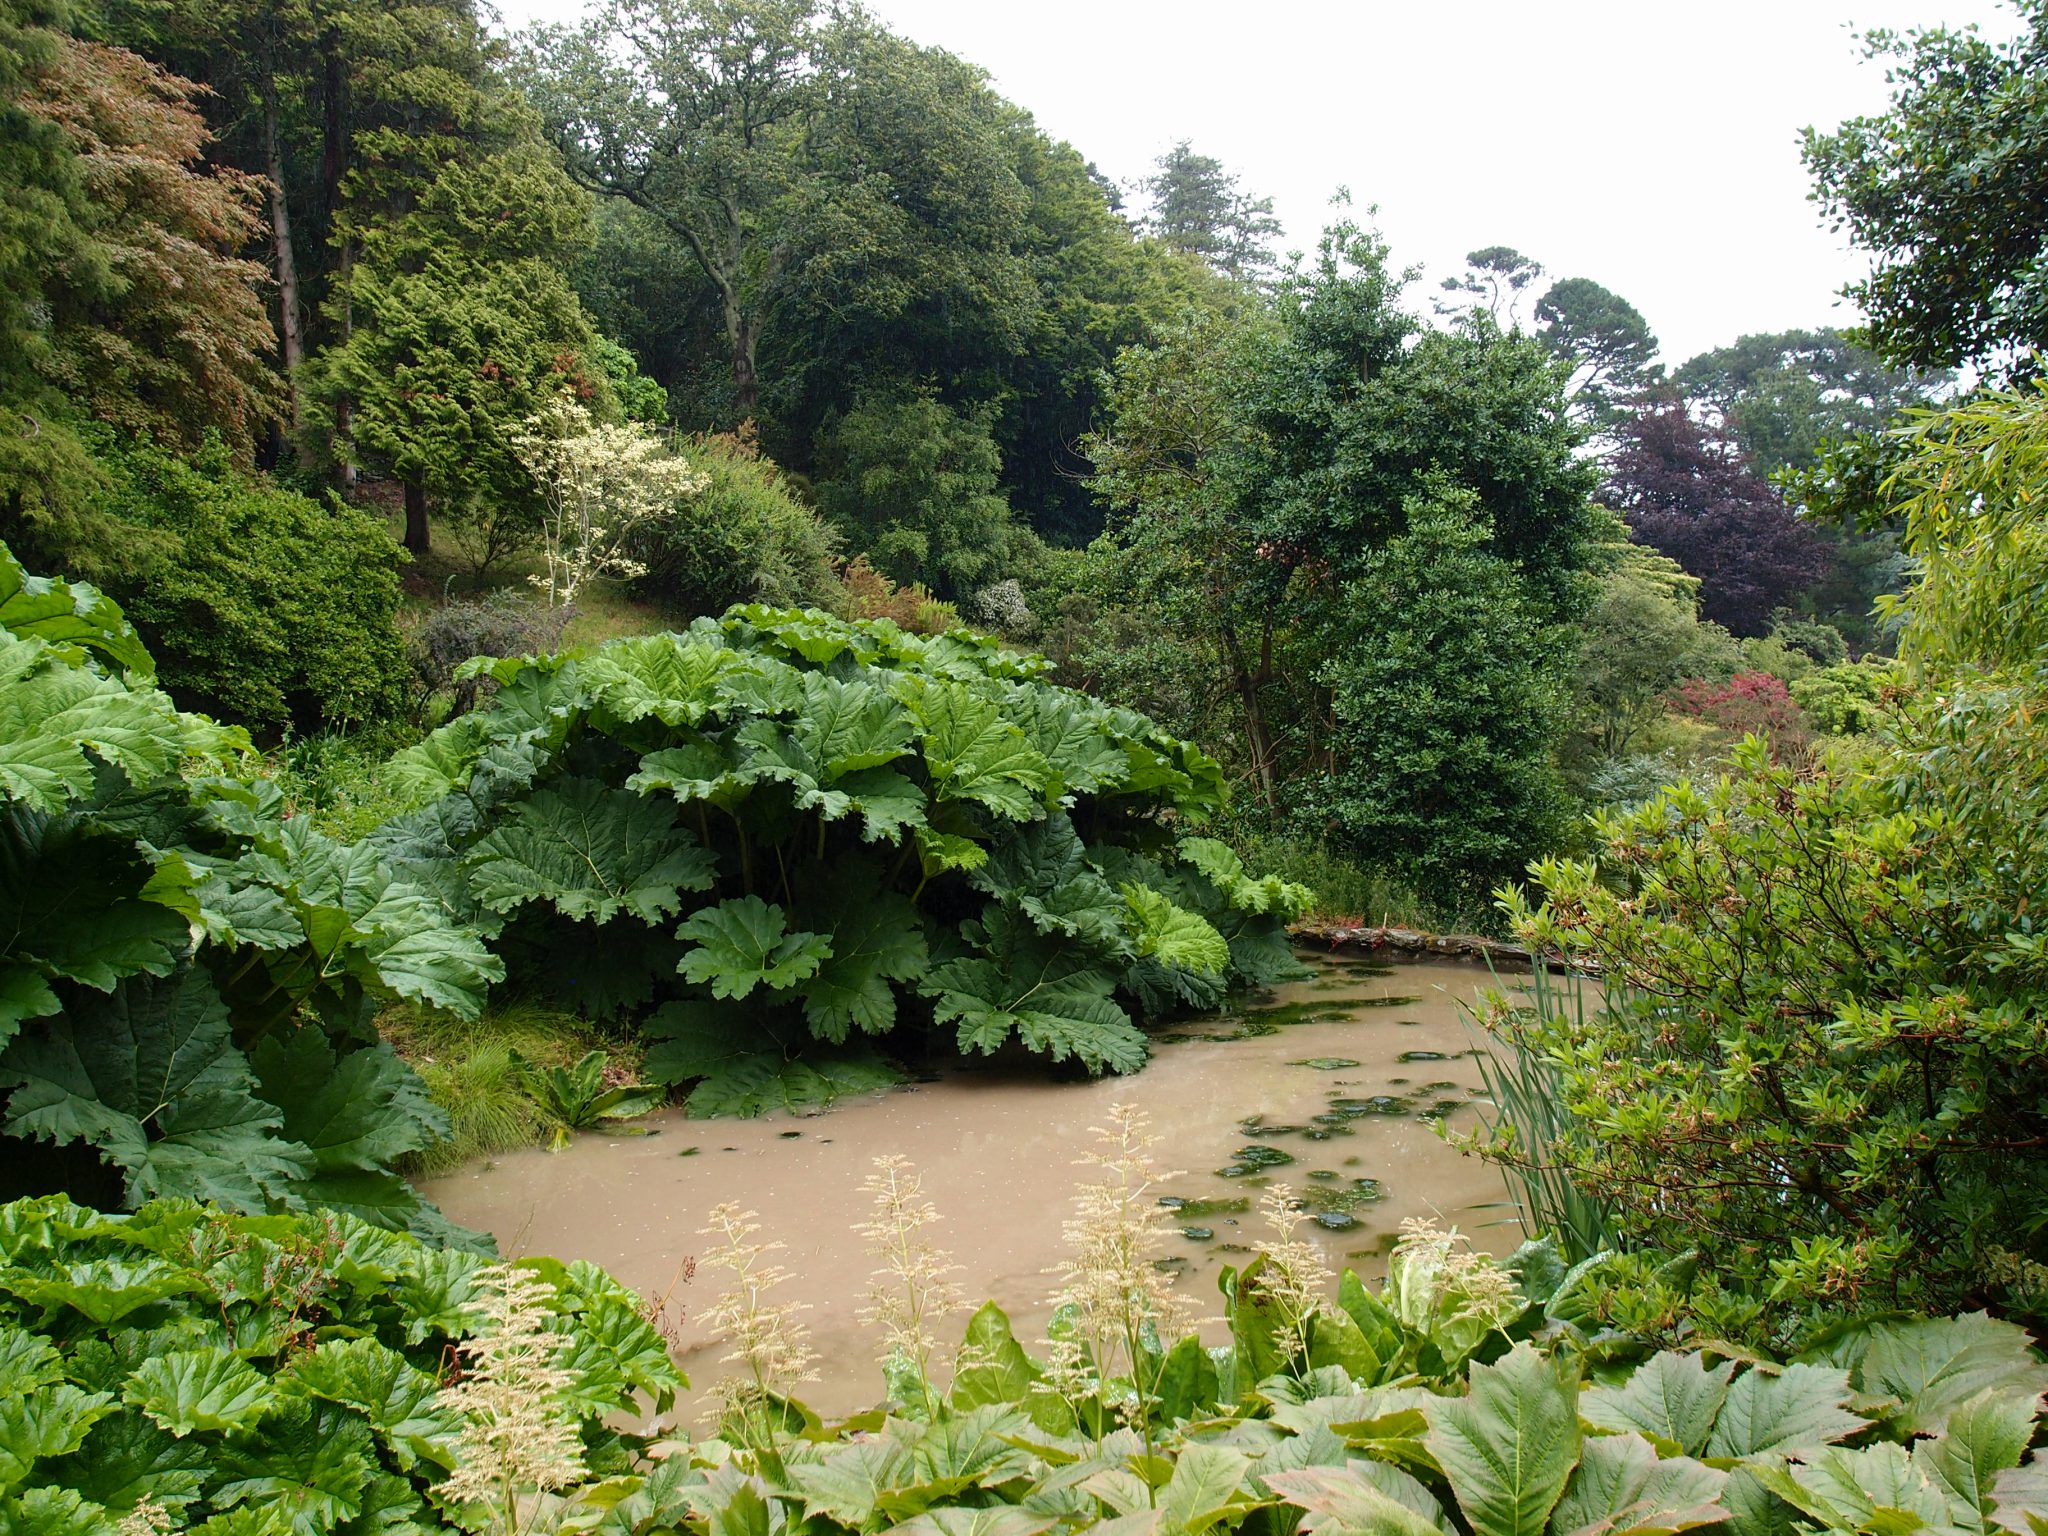 Giant Gunnera plants surround the Lower Pond